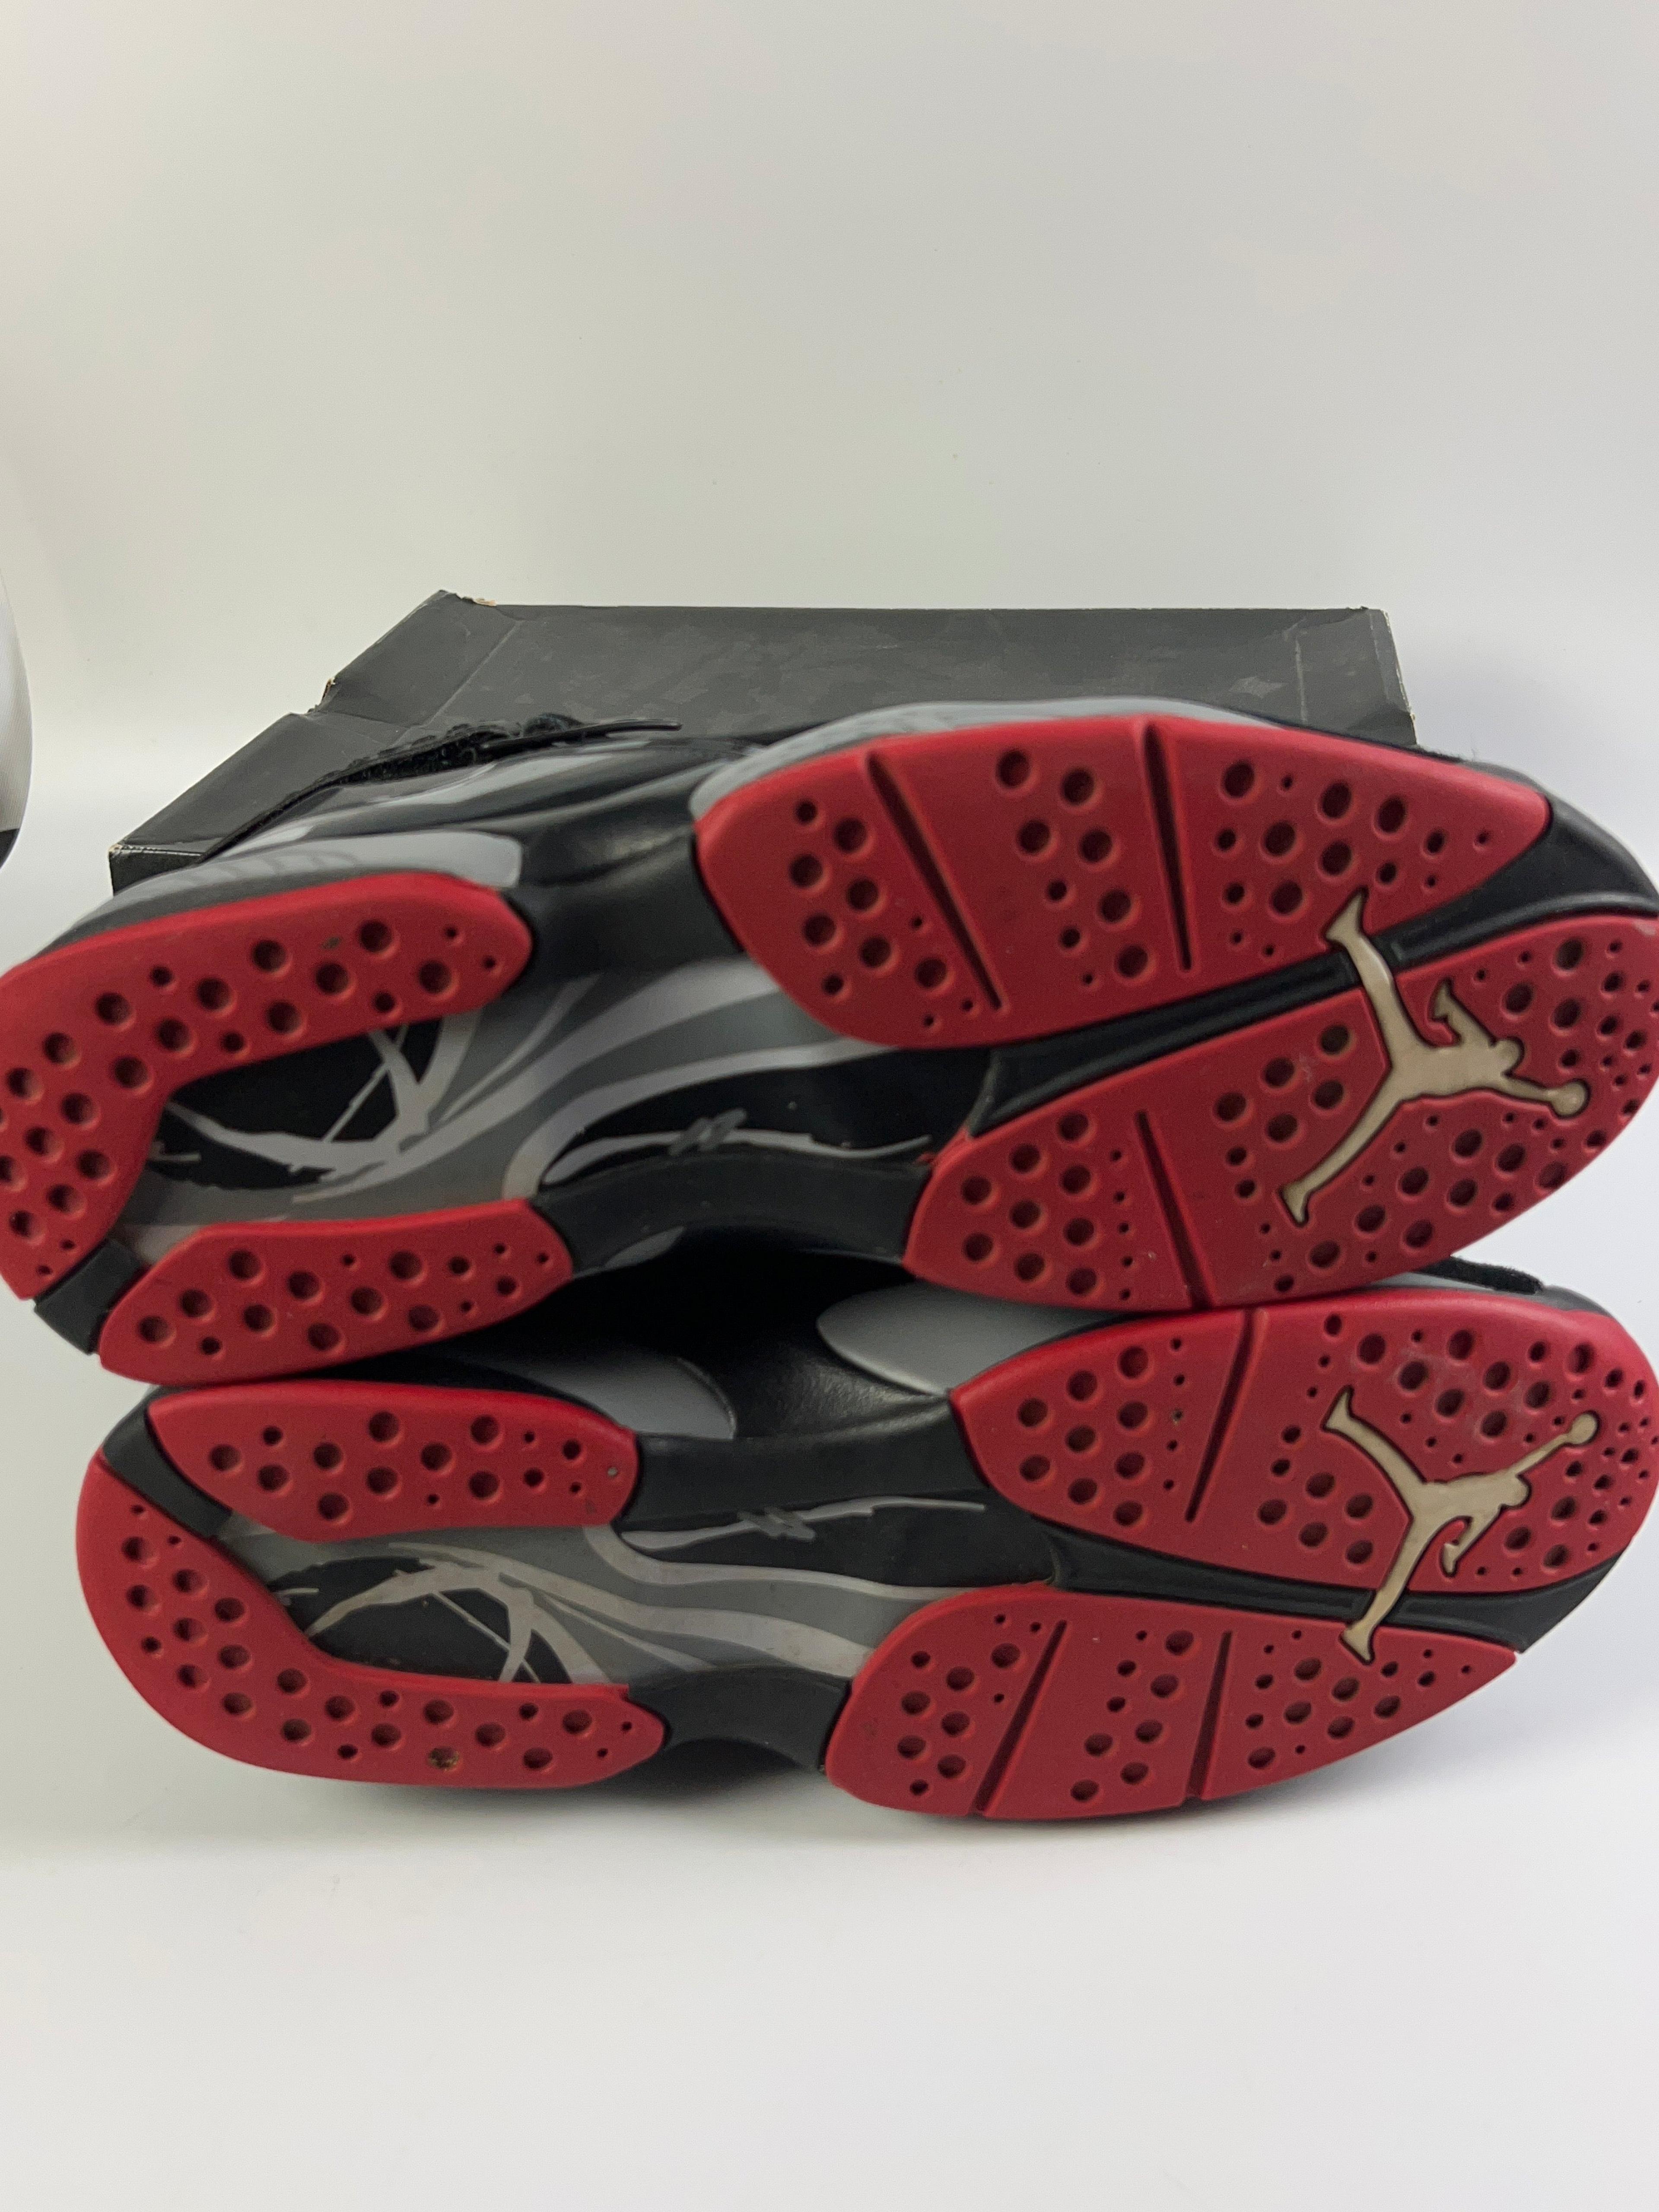 Alternate View 6 of Nike Air Jordan 8 Retro Black Cement 2017 Size 13 305381-022 Bla